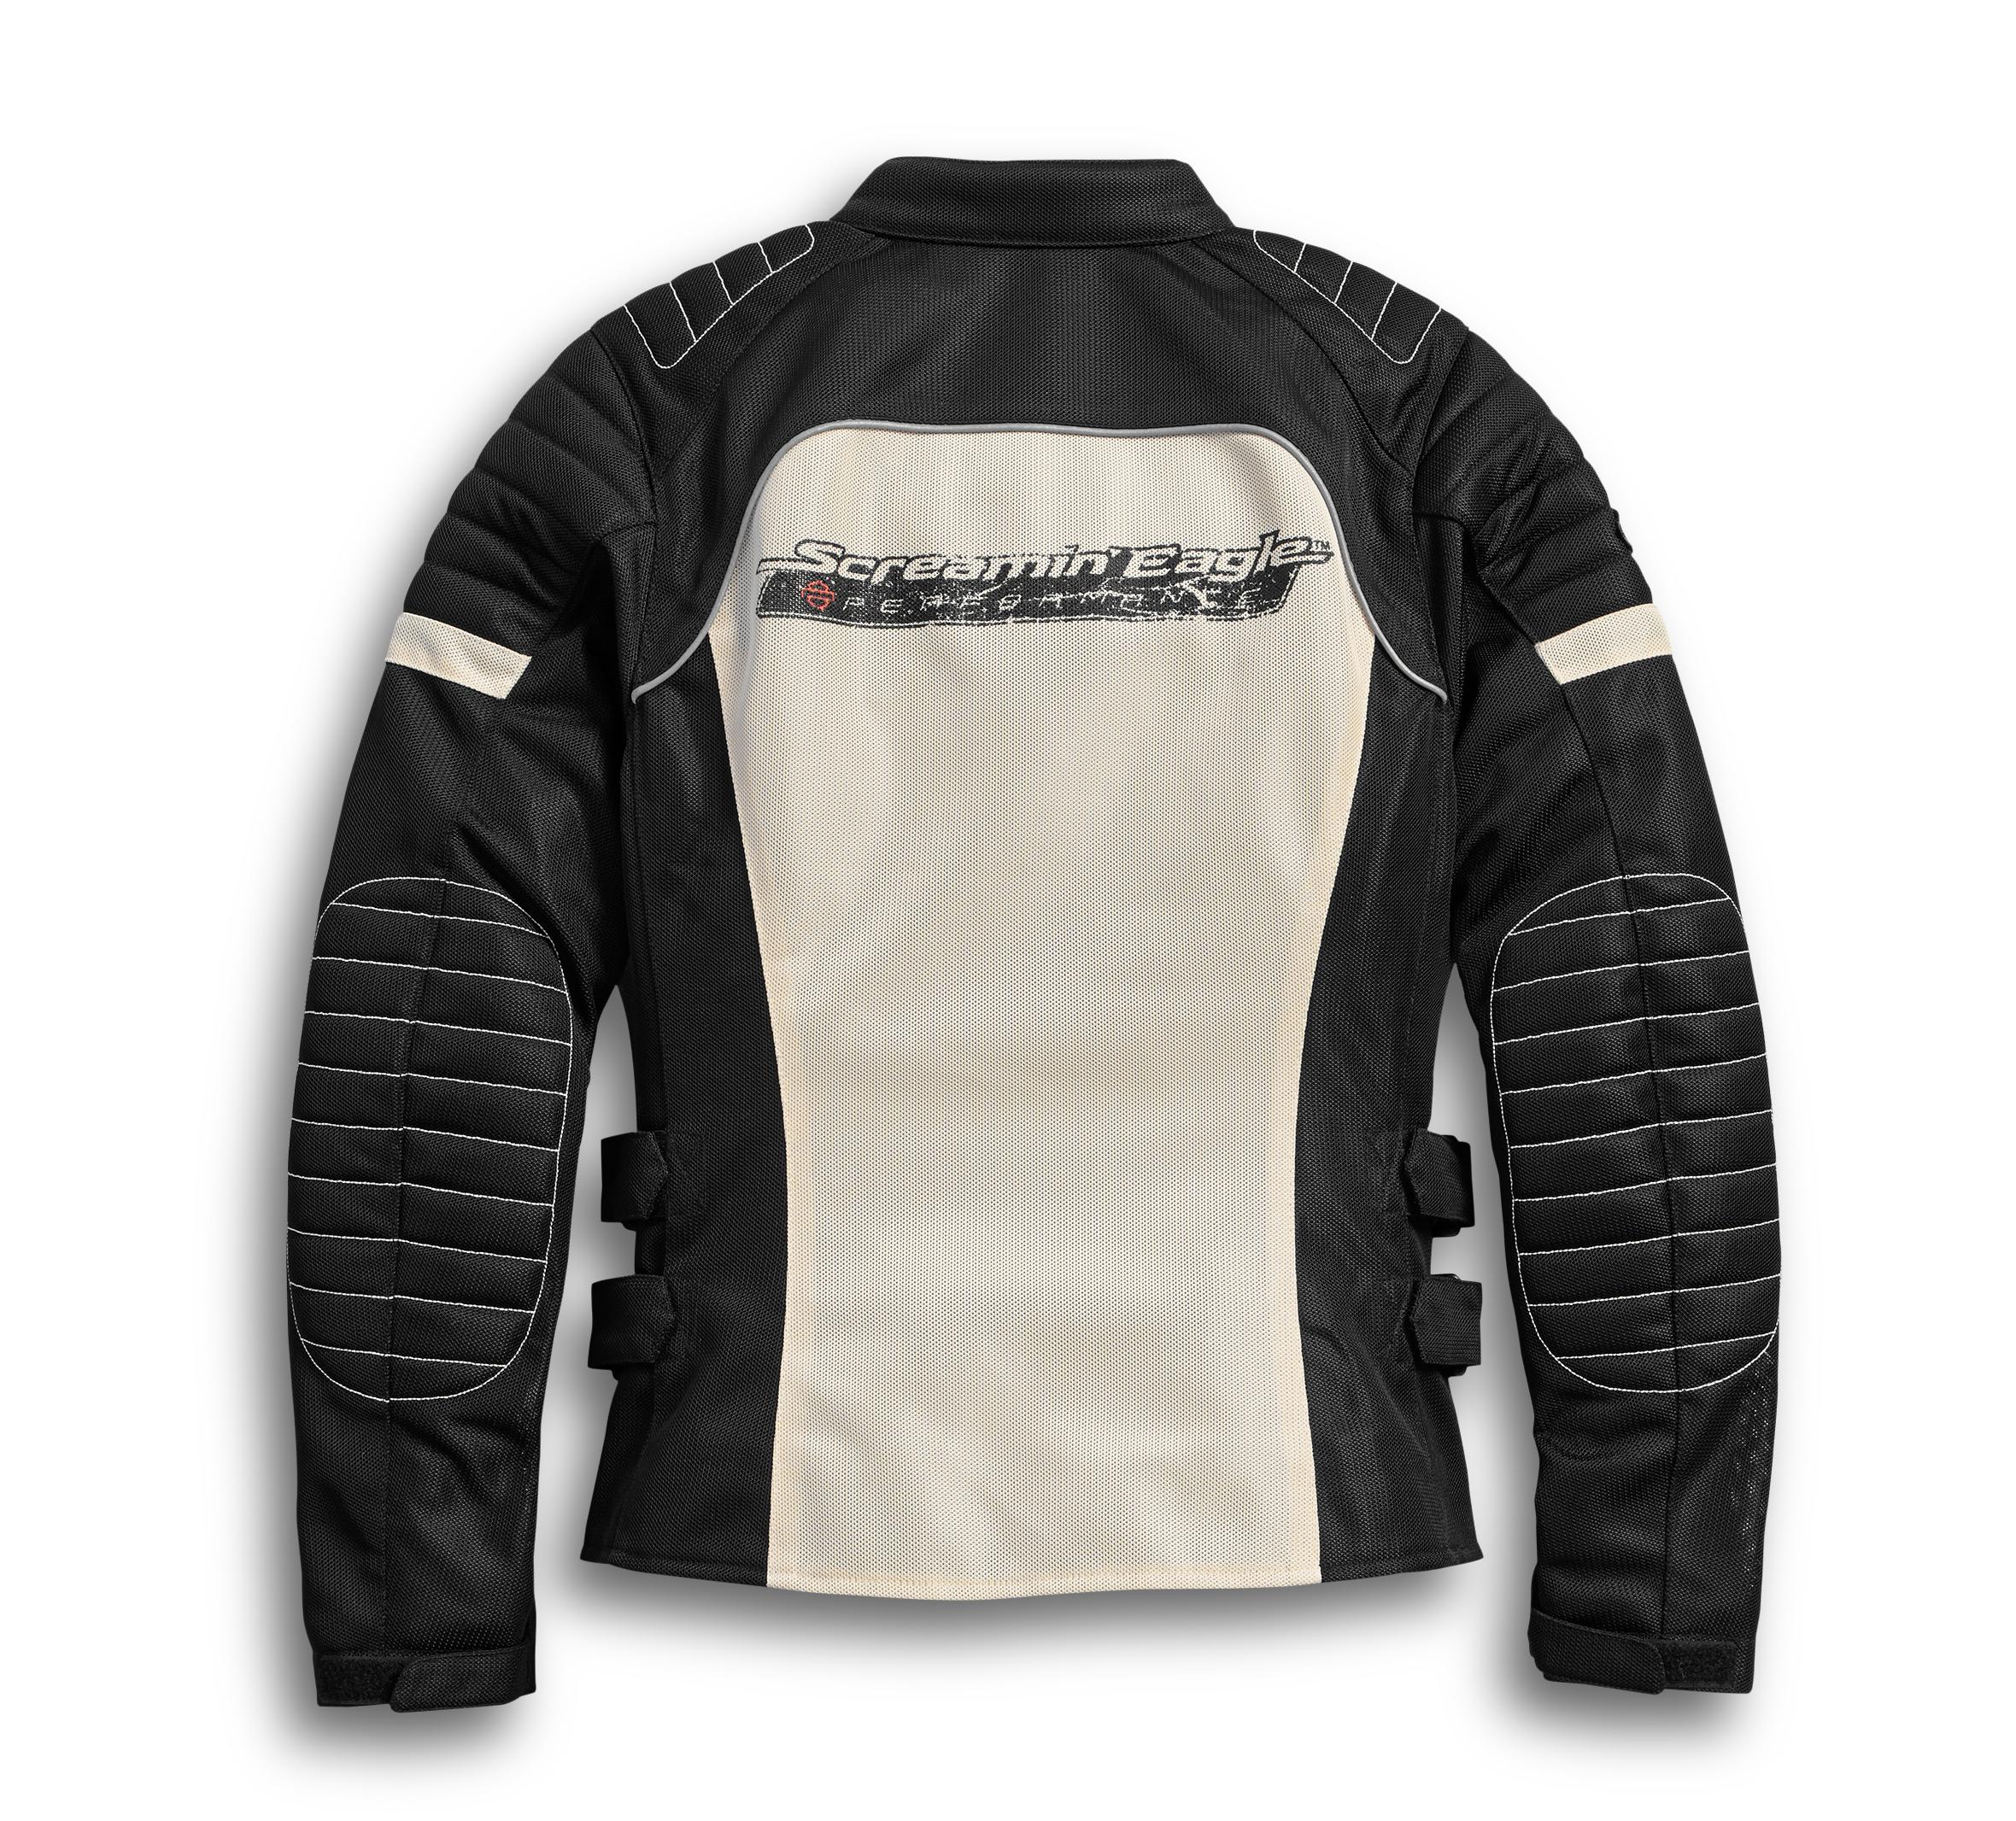 Harley-Davidson Women's Screamin' Eagle Mesh Riding Jacket - 98166-18VW